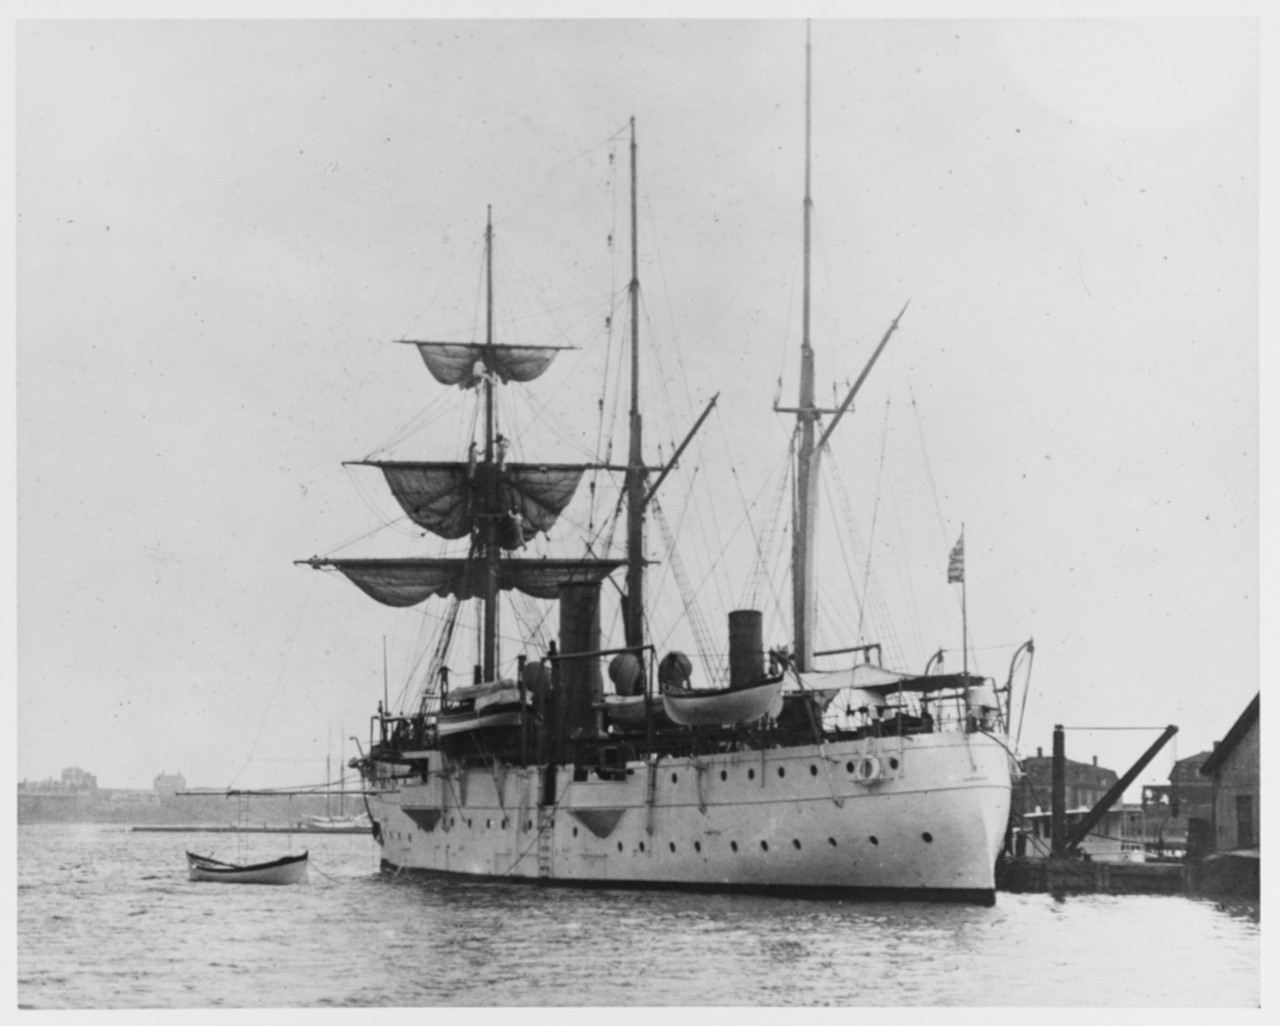 USS BANCROFT